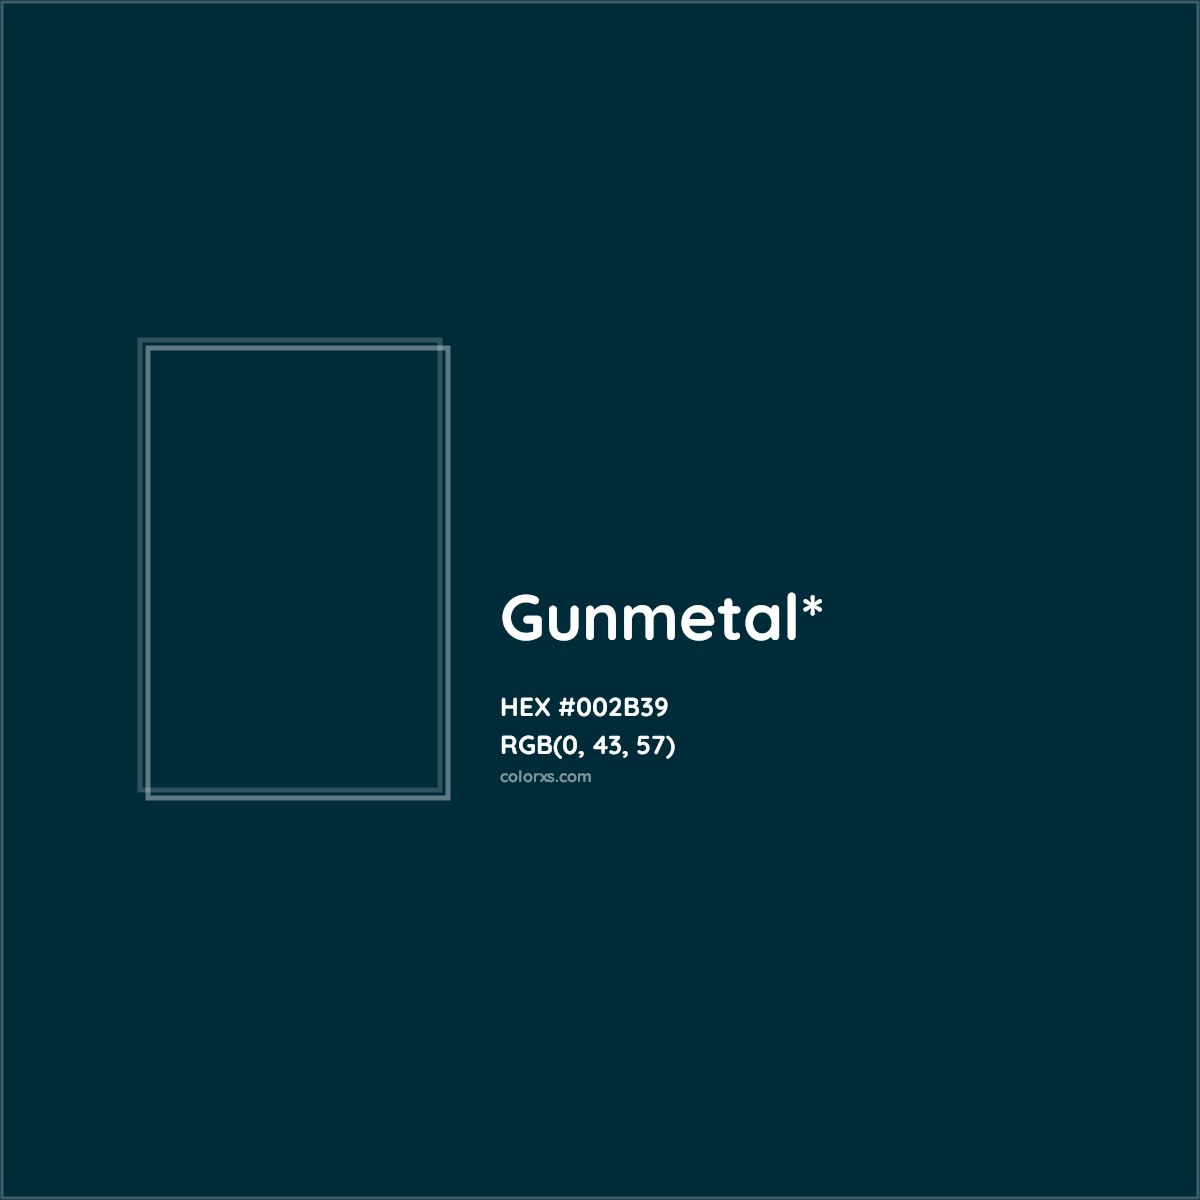 Gunmetal information, Hsl, Rgb